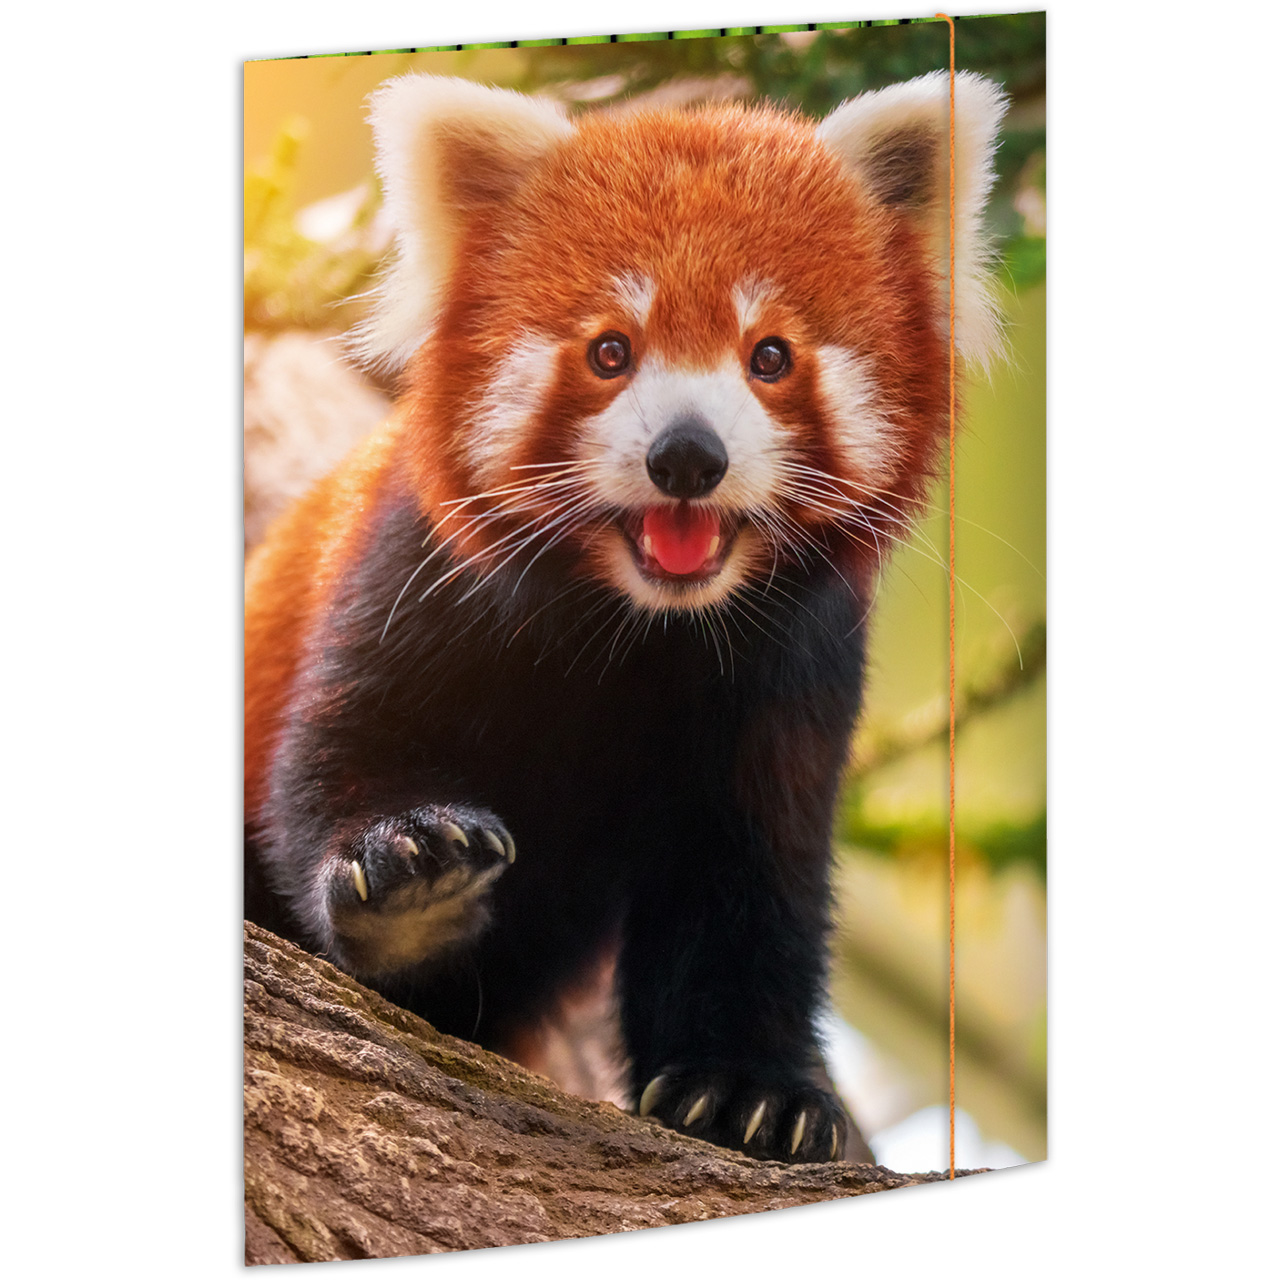 Zeichenmappe A3 · Karton · Motiv: Roter Panda · online kaufen - LAFÜLIKI